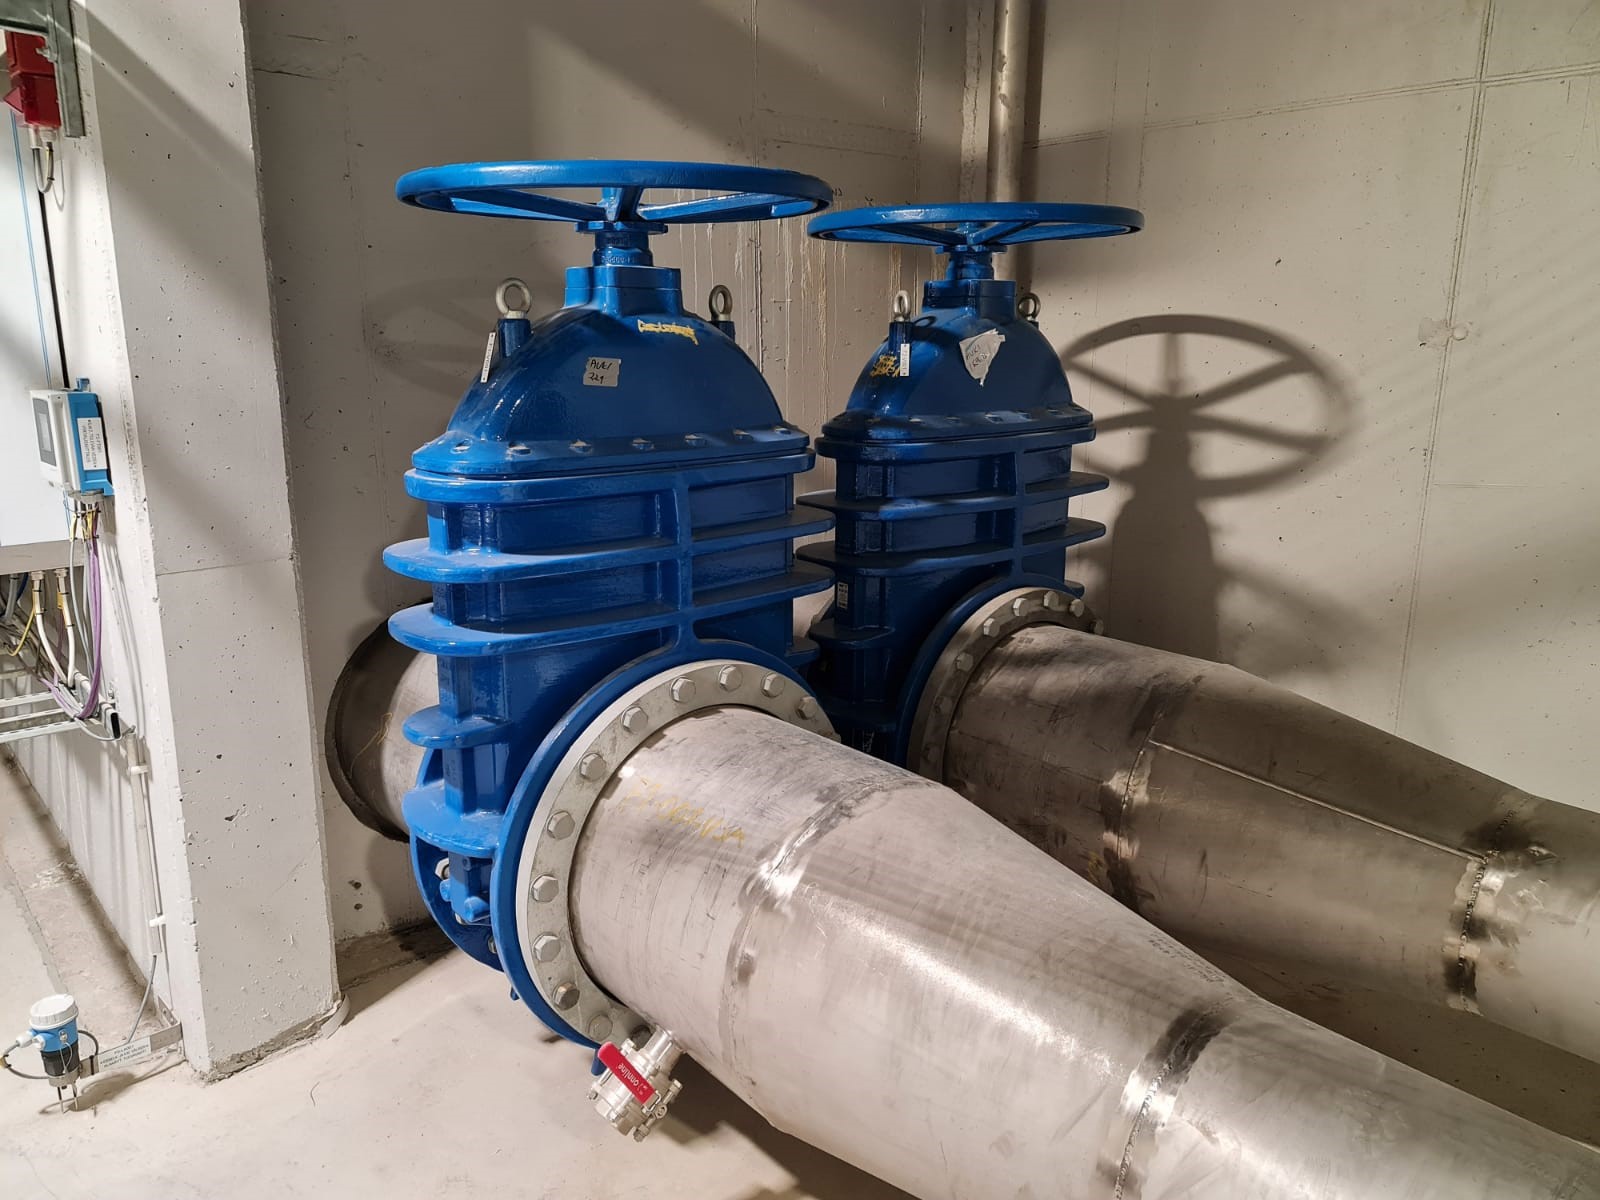 AVK valves installed at wastewater treatment plant in Mikkeli, Finland